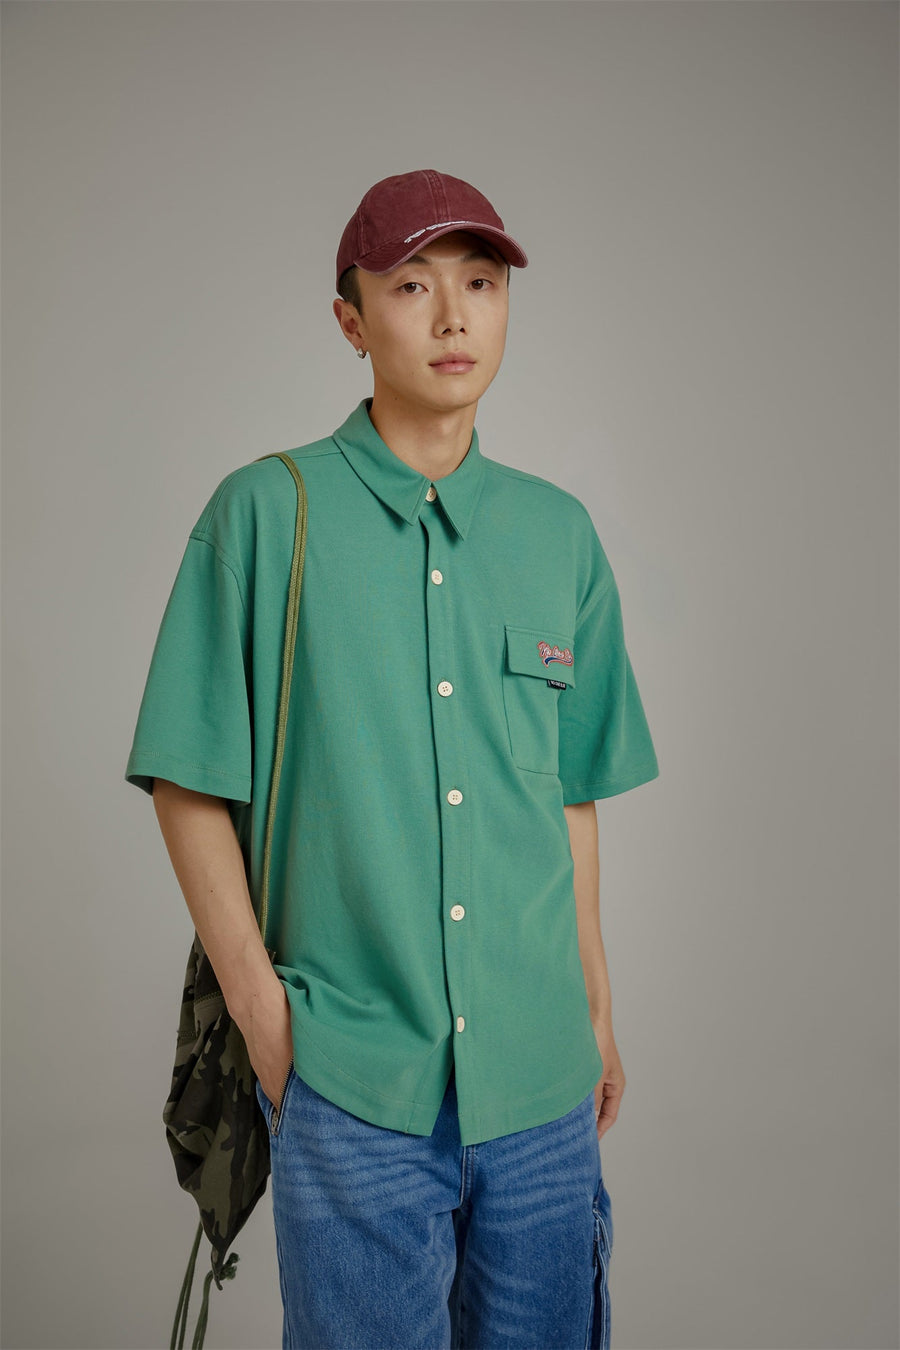 CHUU Embroidered Pocket Shirt